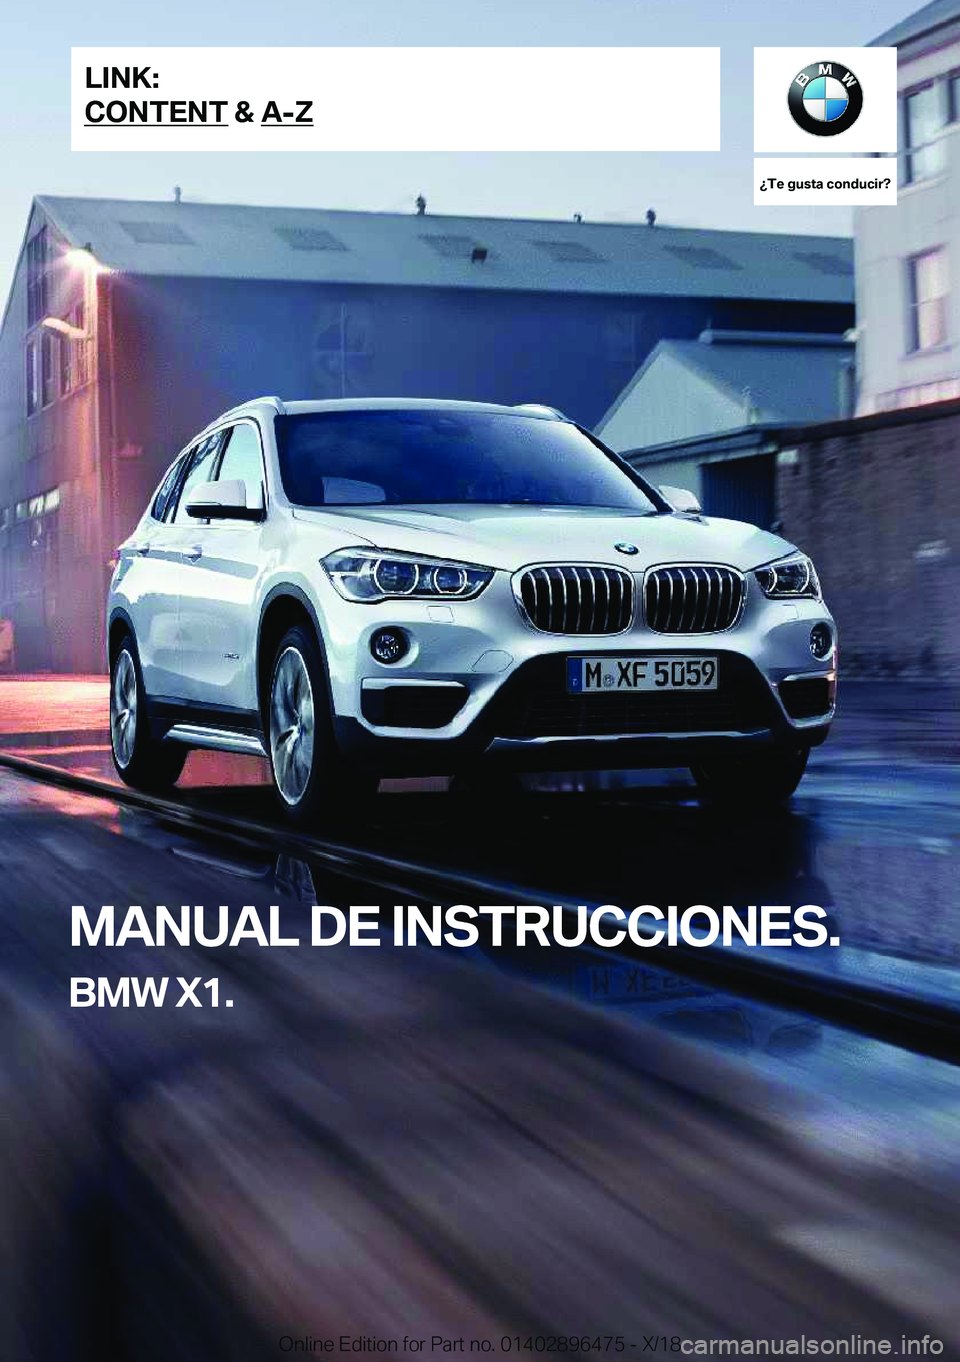 BMW X1 2019  Manuales de Empleo (in Spanish) ��T�e��g�u�s�t�a��c�o�n�d�u�c�i�r� 
�M�A�N�U�A�L��D�E��I�N�S�T�R�U�C�C�I�O�N�E�S�.
�B�M�W��X�1�.�L�I�N�K�:
�C�O�N�T�E�N�T��&��A�-�Z�O�n�l�i�n�e��E�d�i�t�i�o�n��f�o�r��P�a�r�t��n�o�.��0�1�